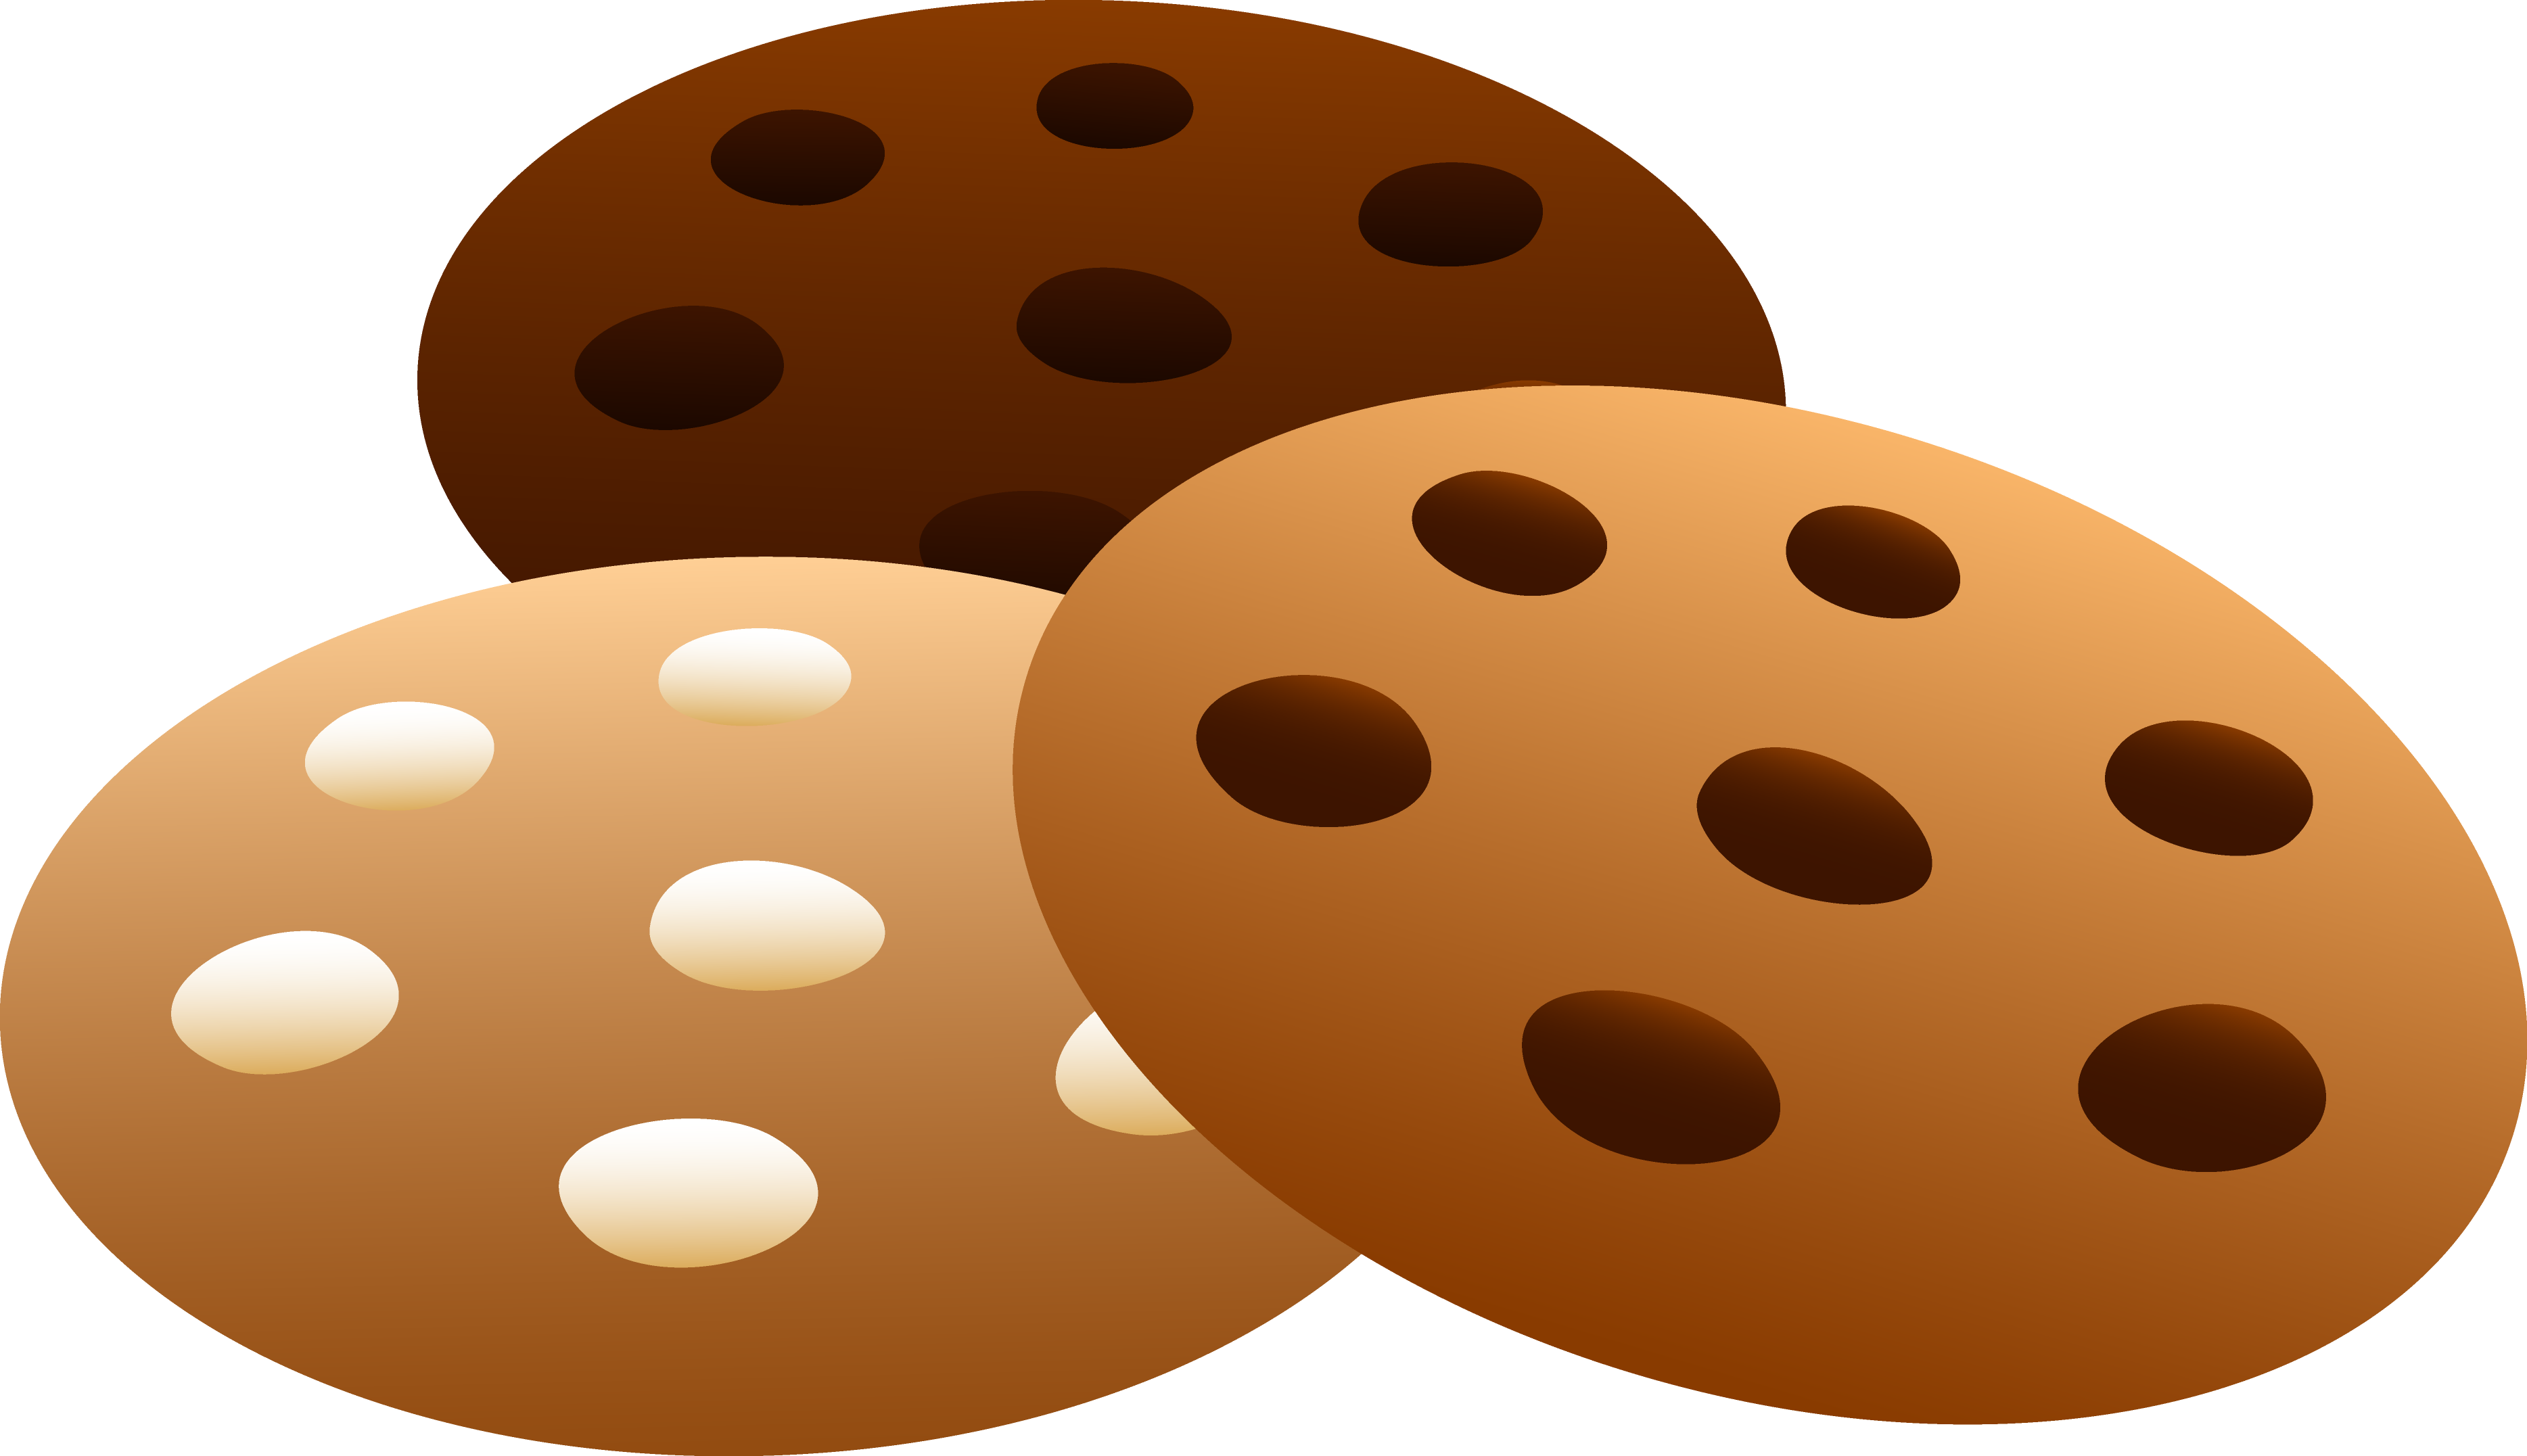 Cartoon Chocolate Chip Cookie